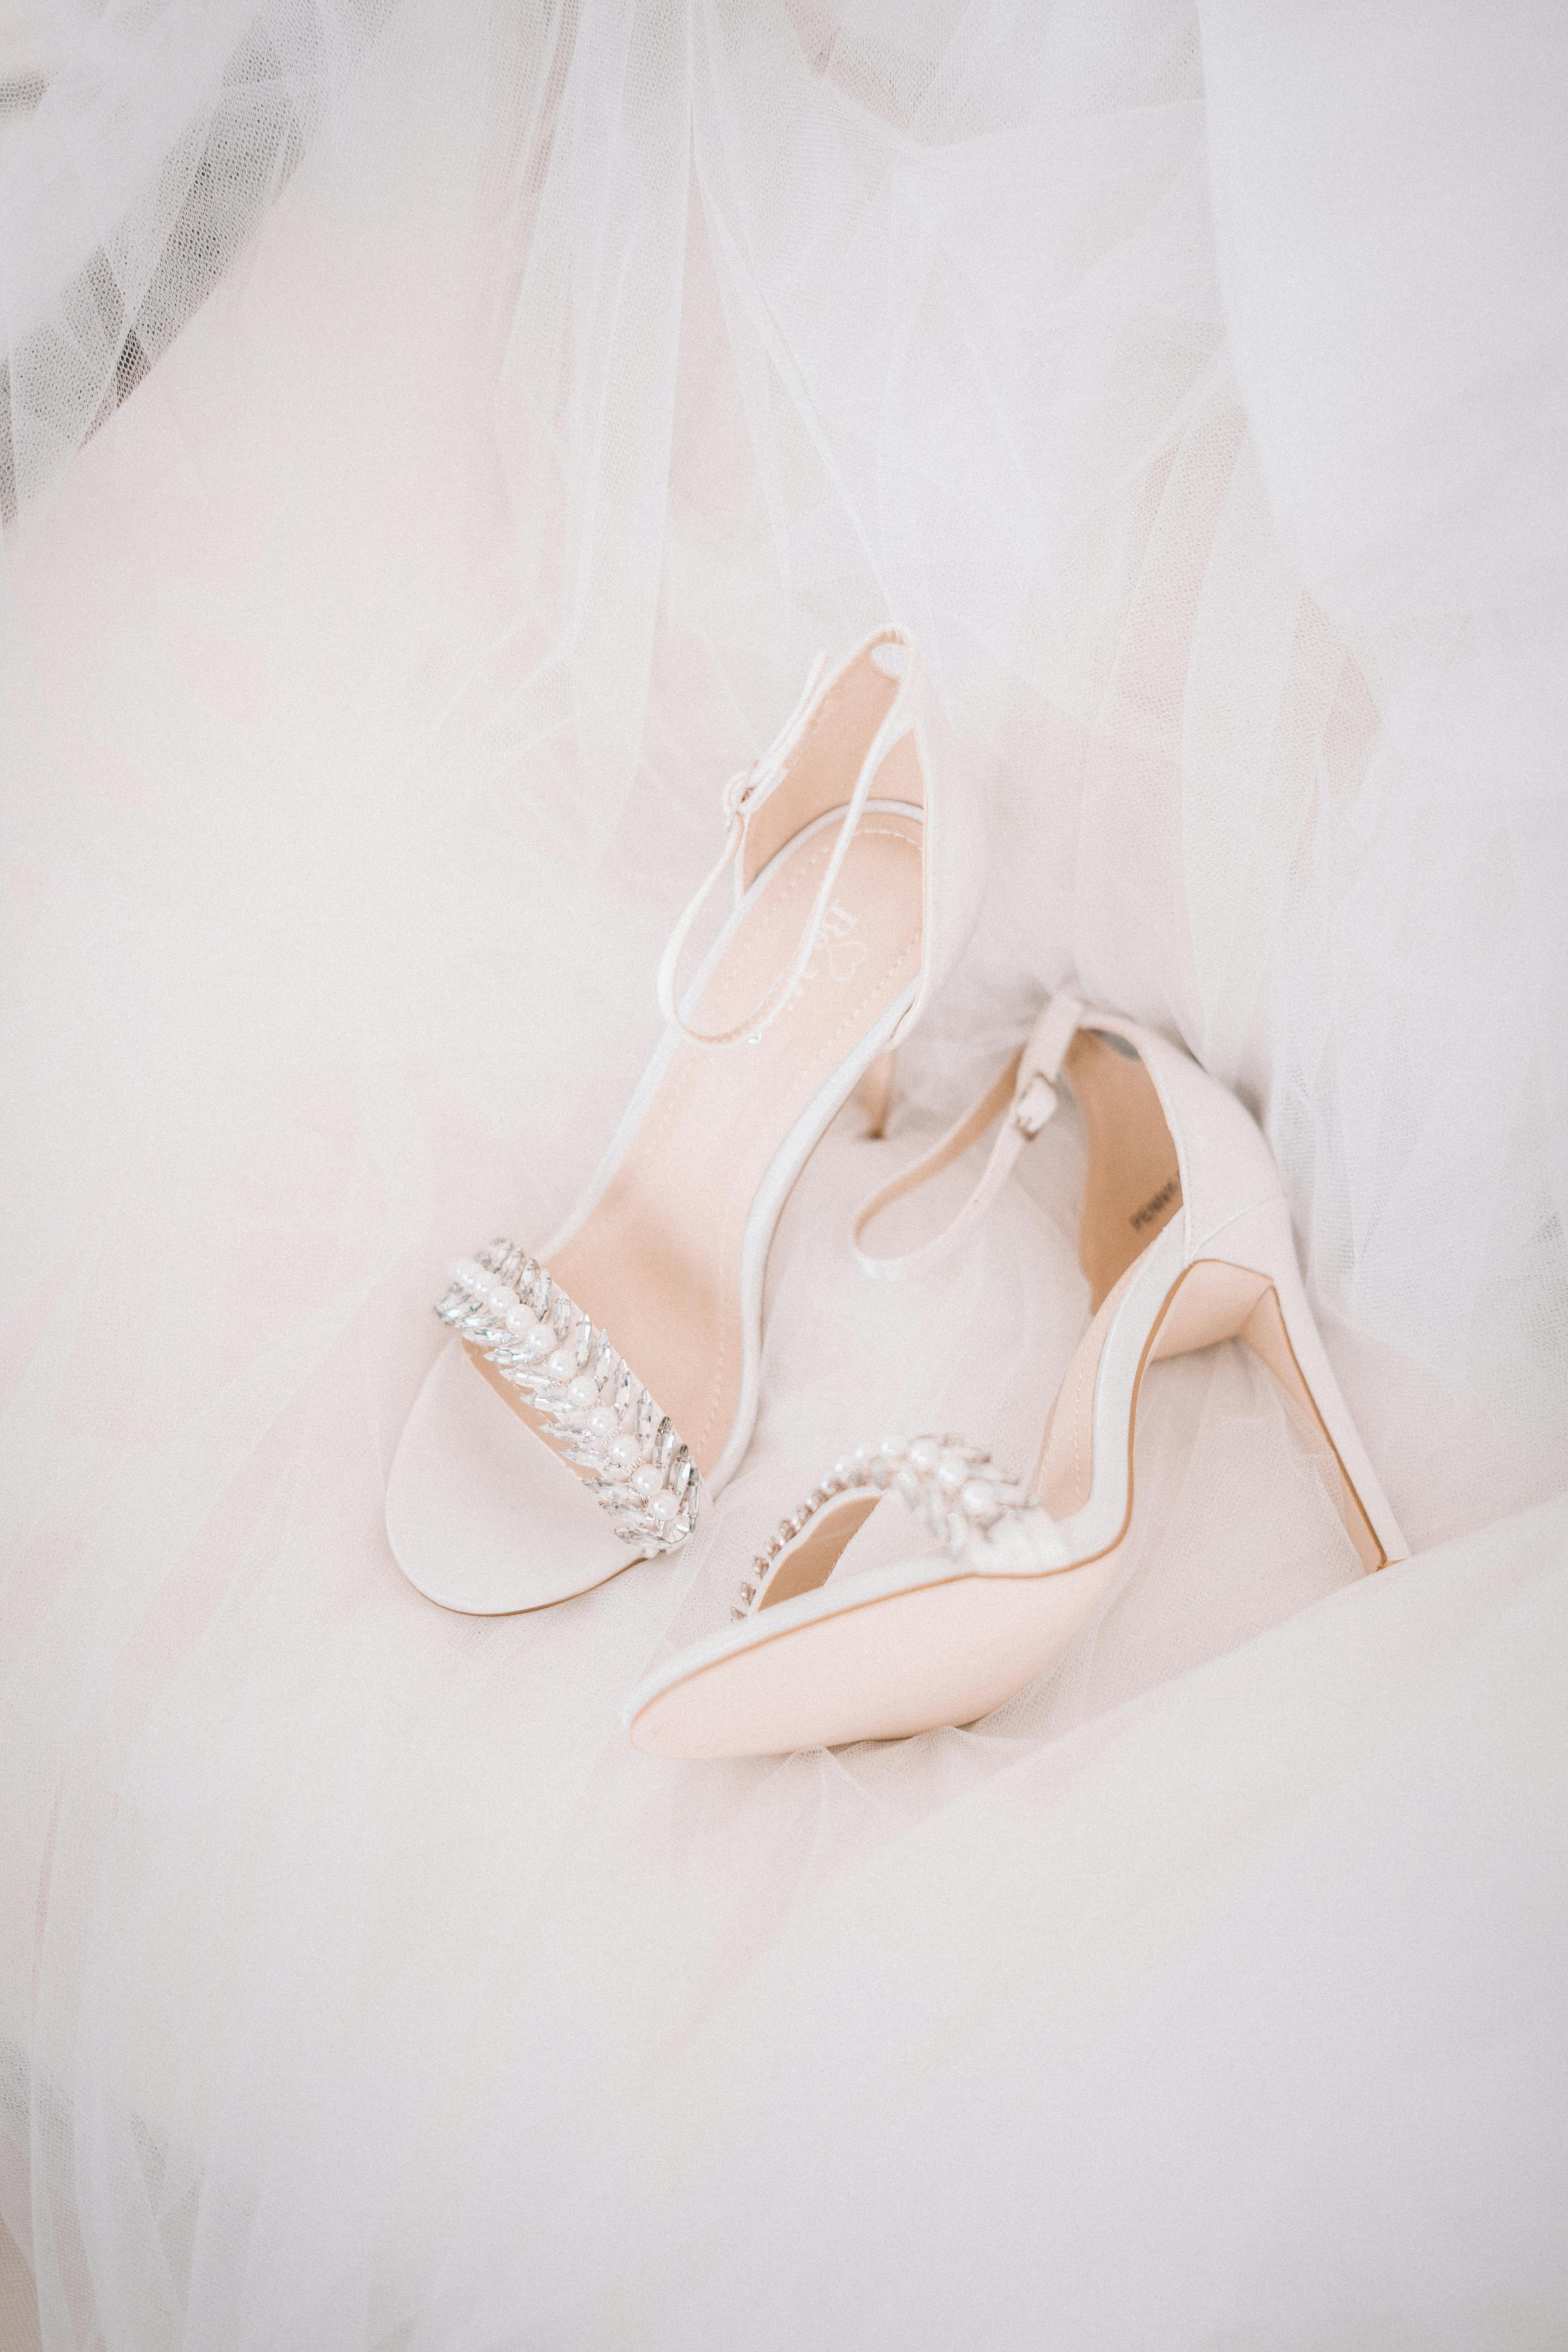 Angela Nuran Shoes | Comfortable wedding Shoes